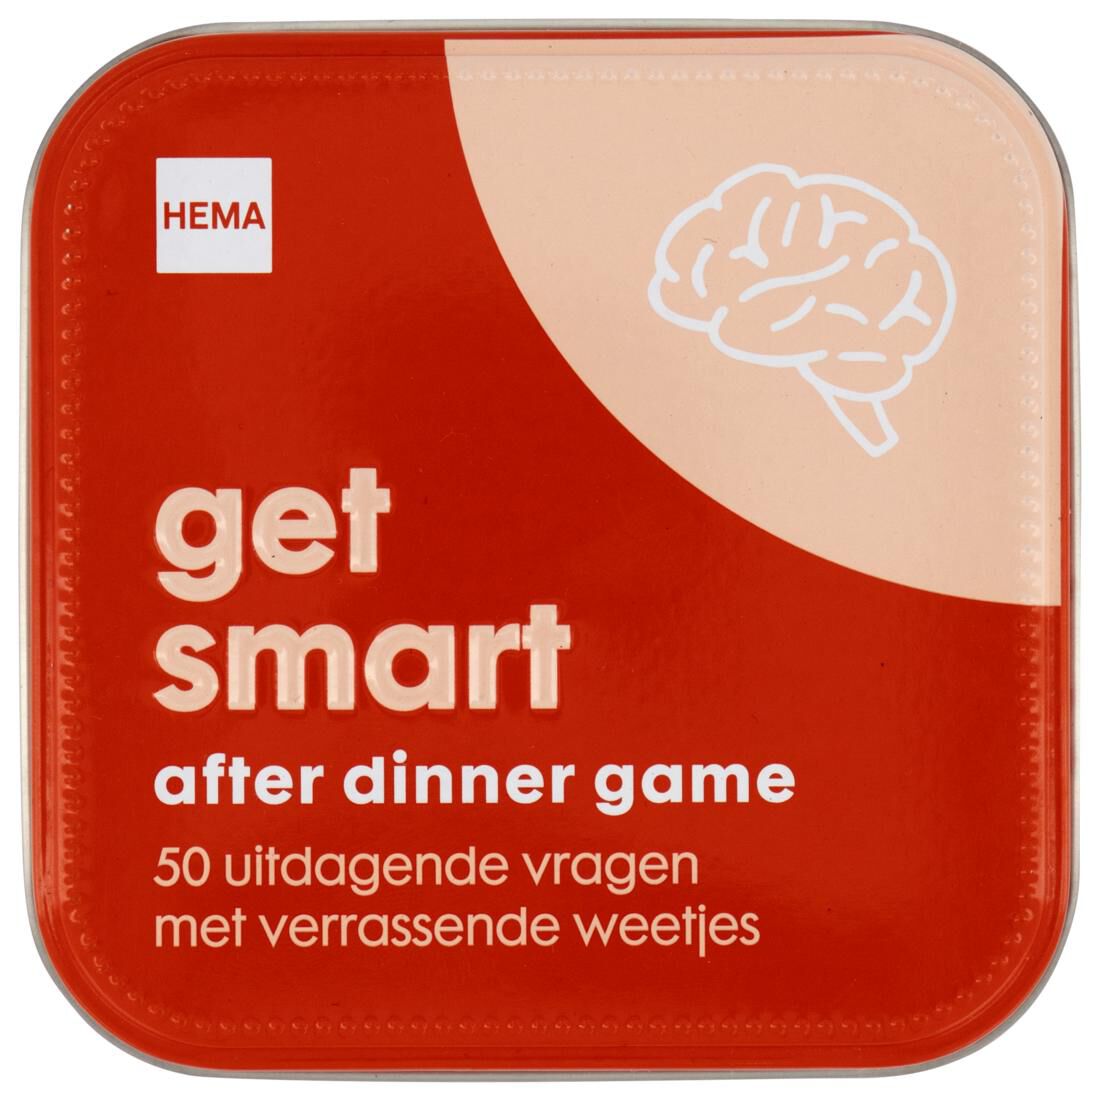 HEMA After Dinner Game - Get Smart